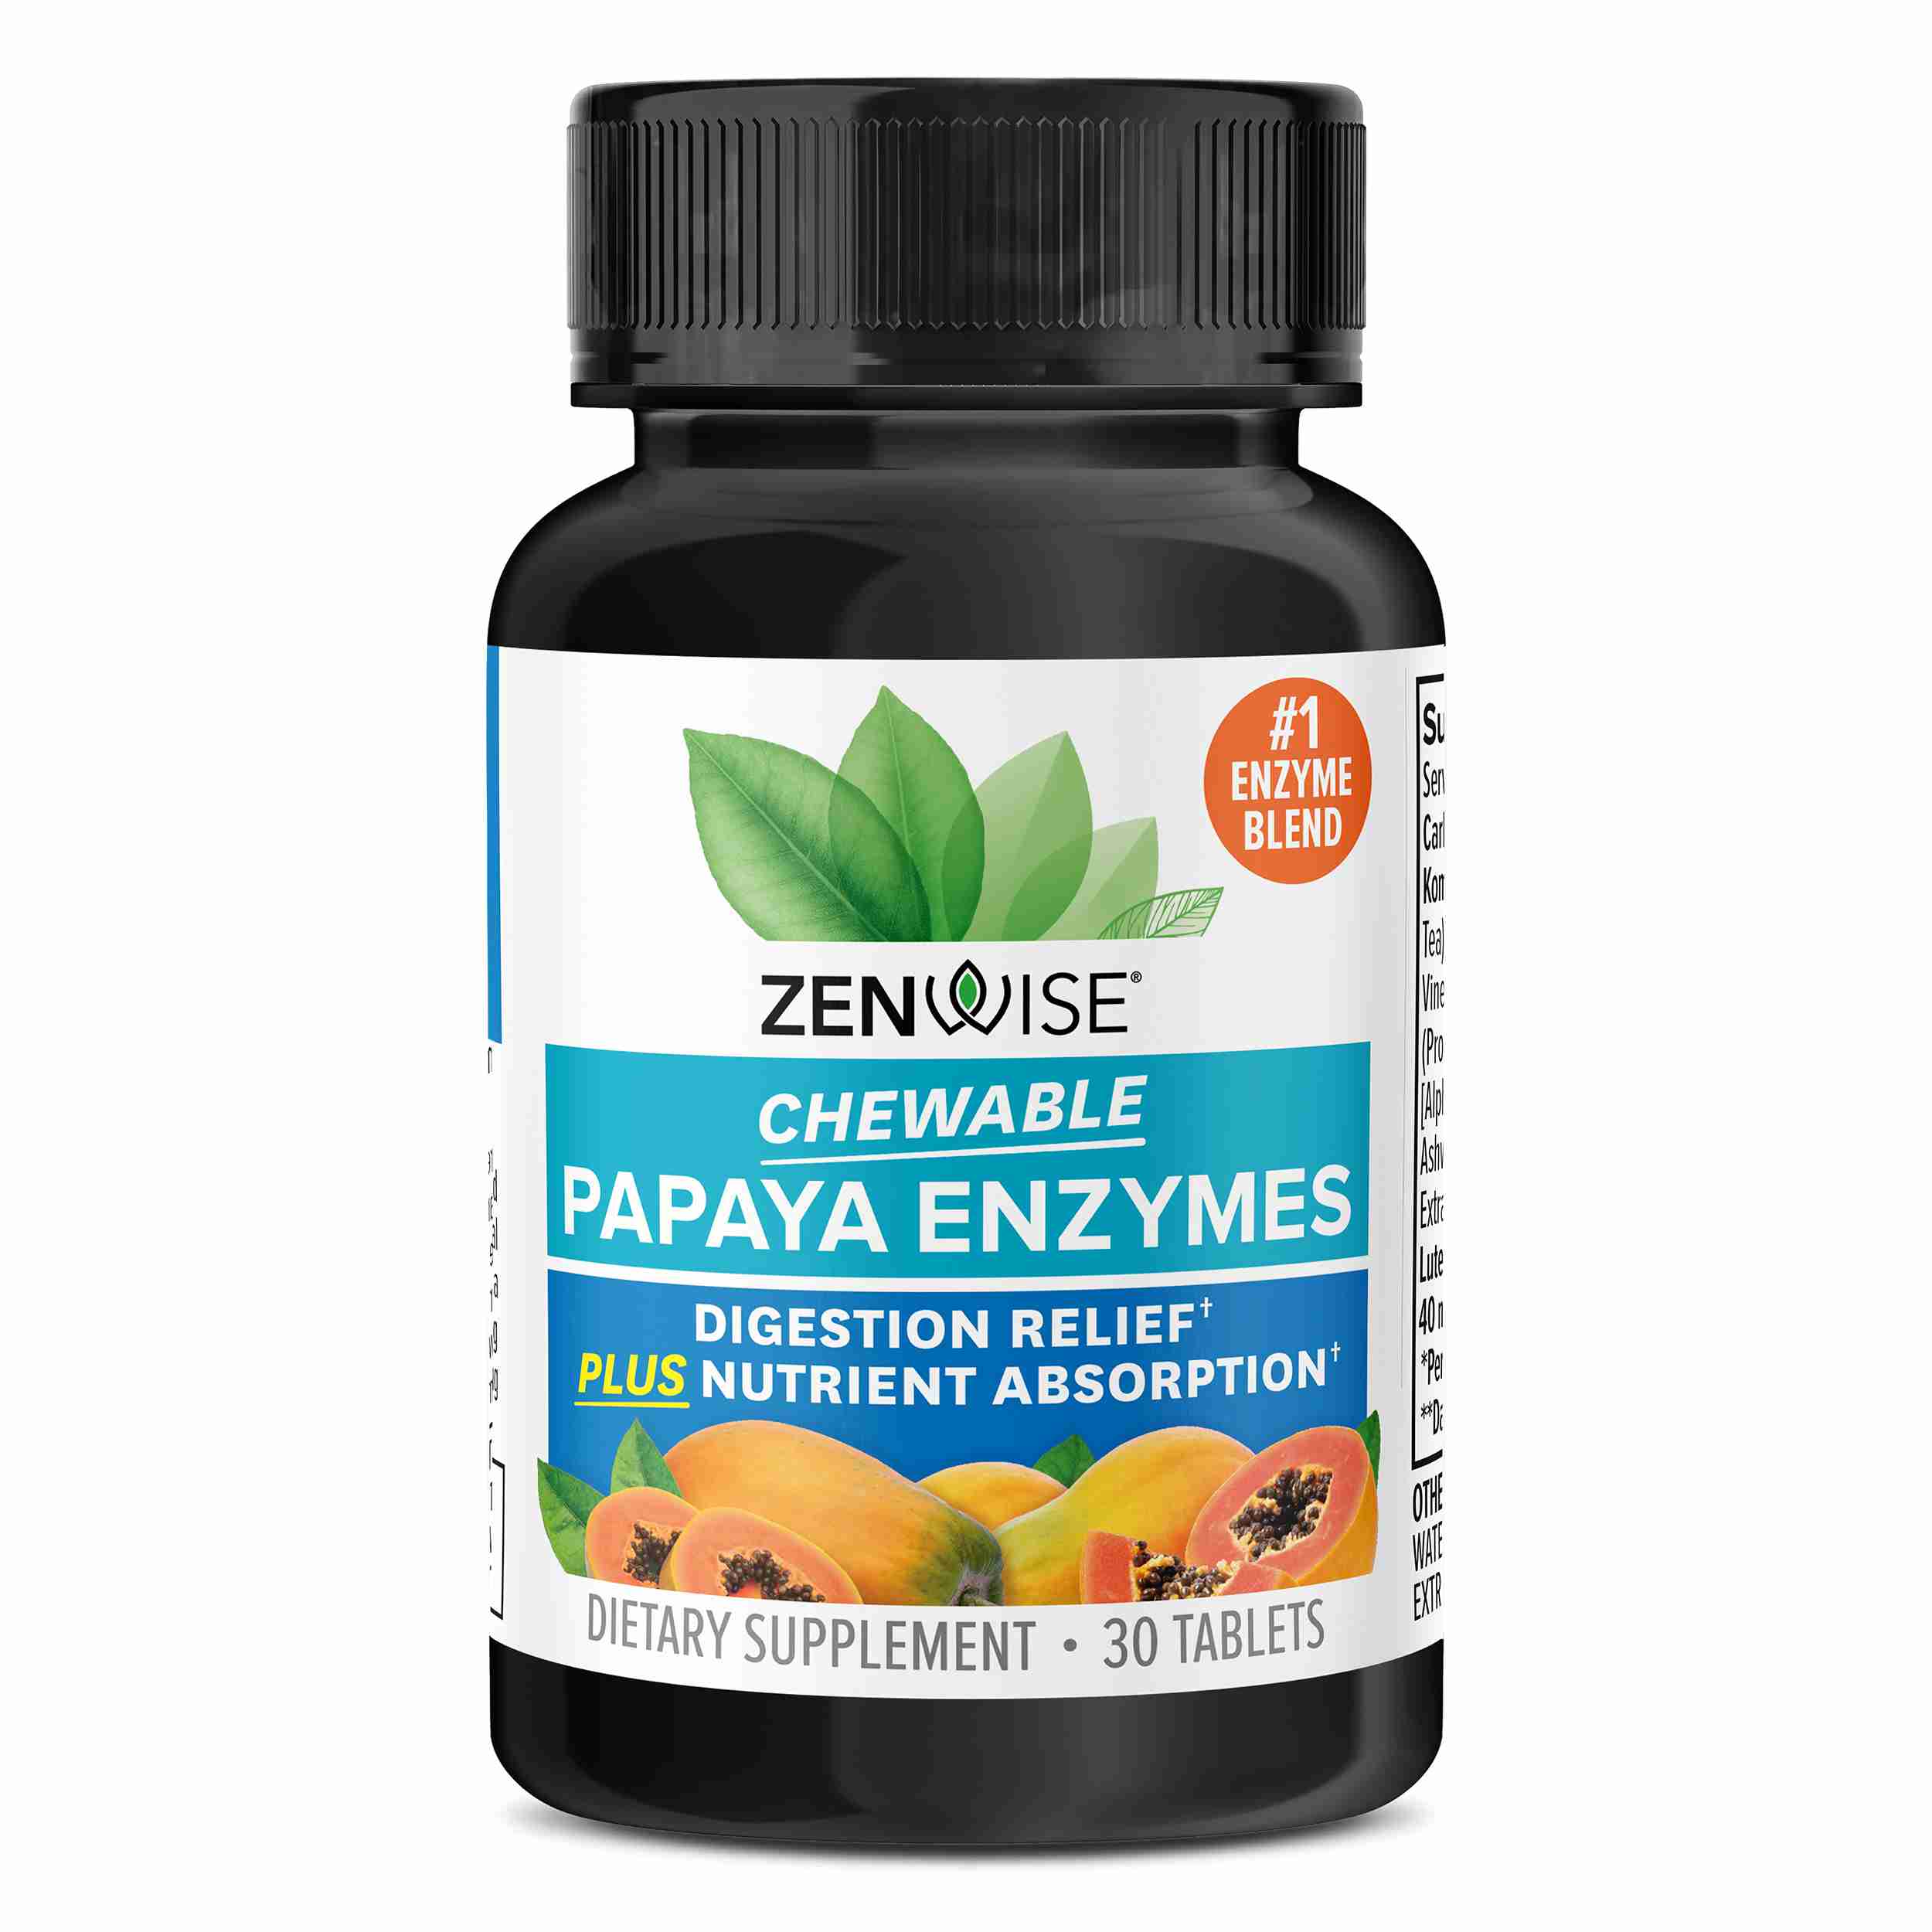 papaya-enzymes-chewable with cash back rebate